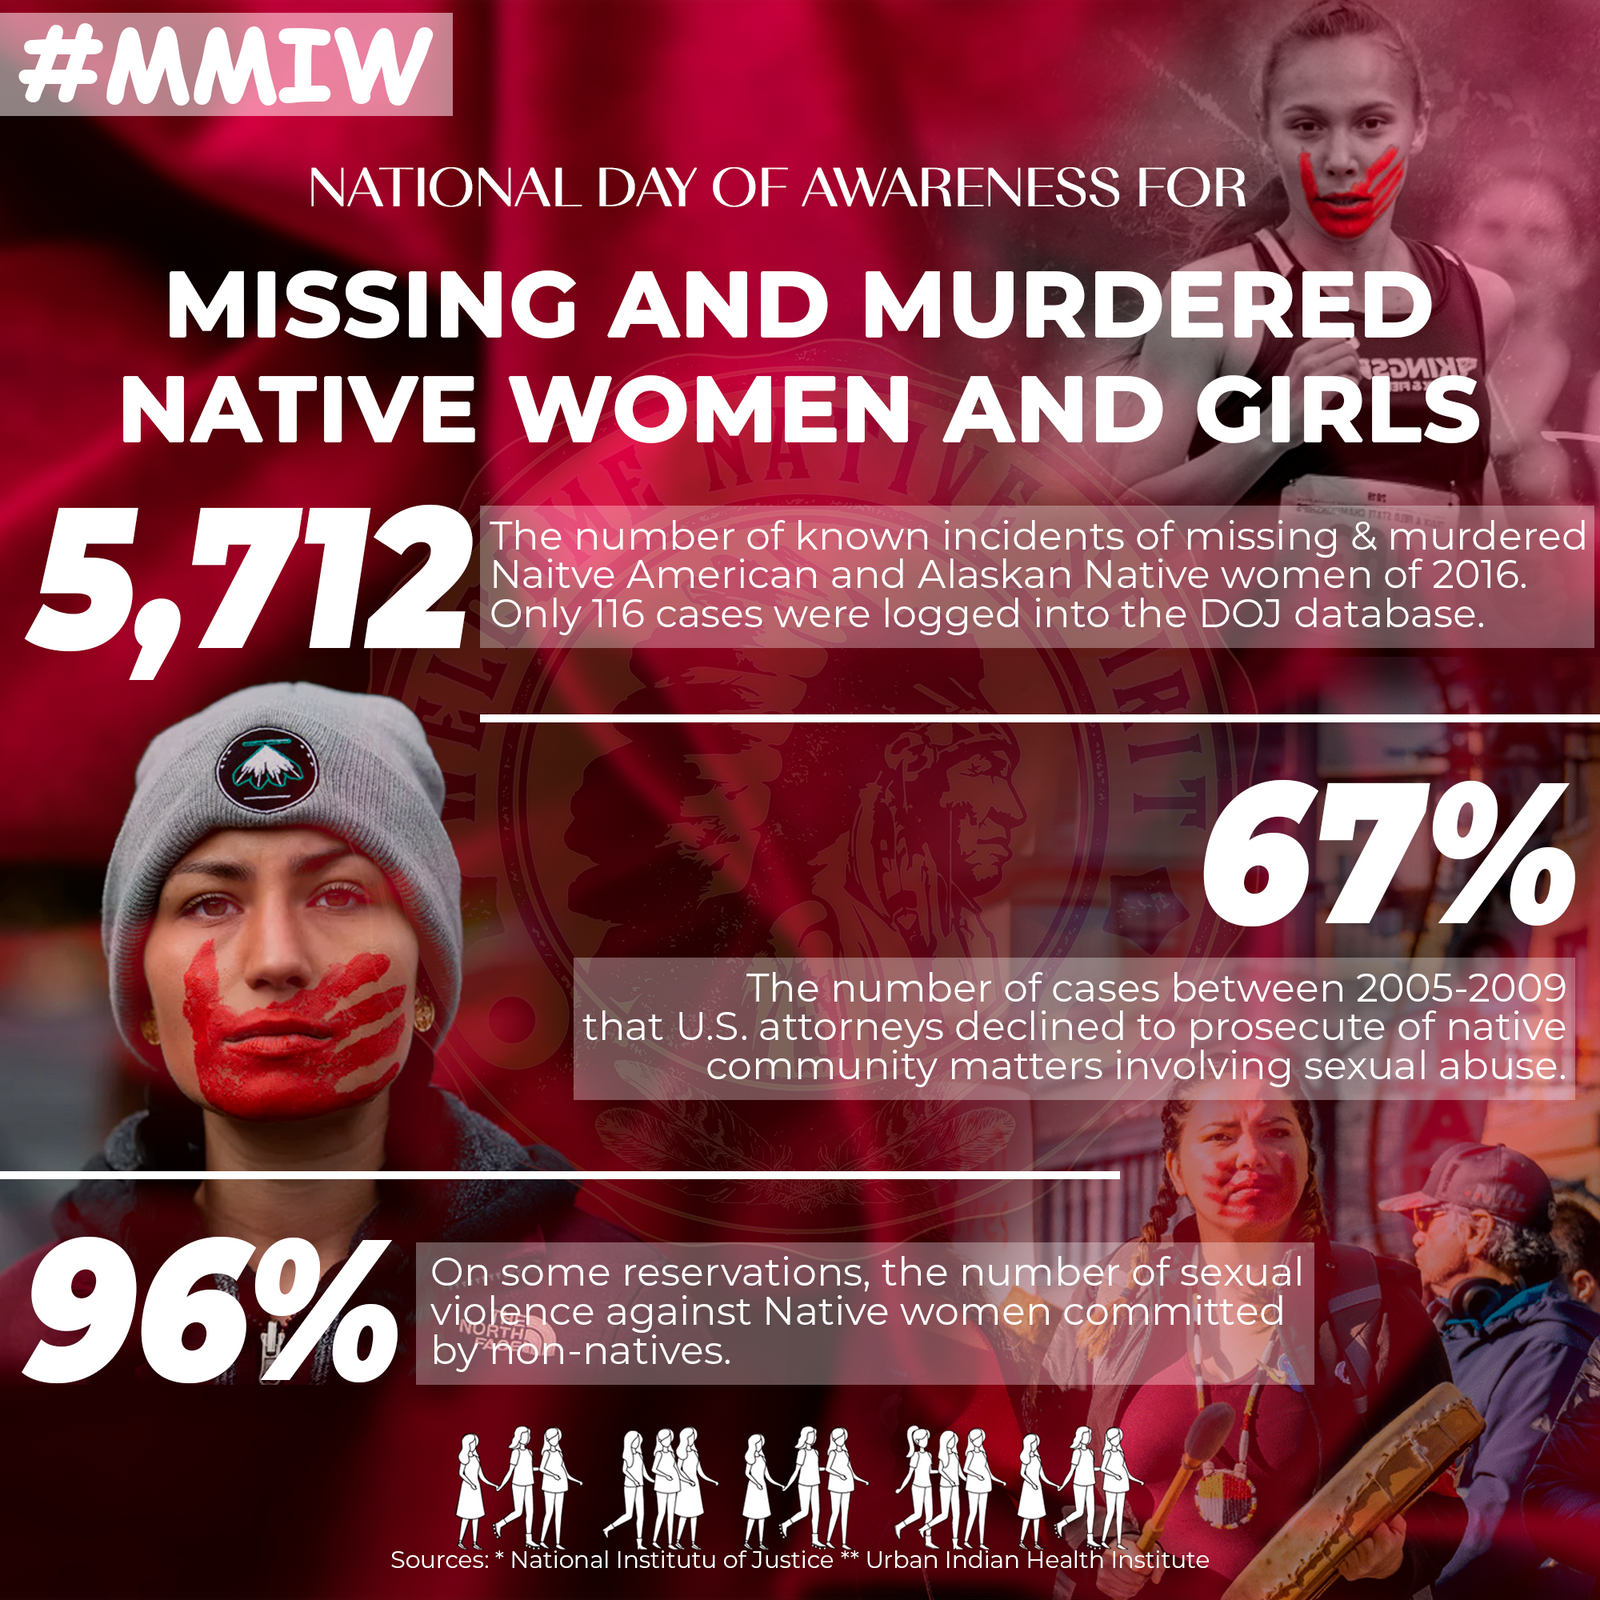 MMIW Clothing Missing Murdered Indigenous Women Awareness Silent